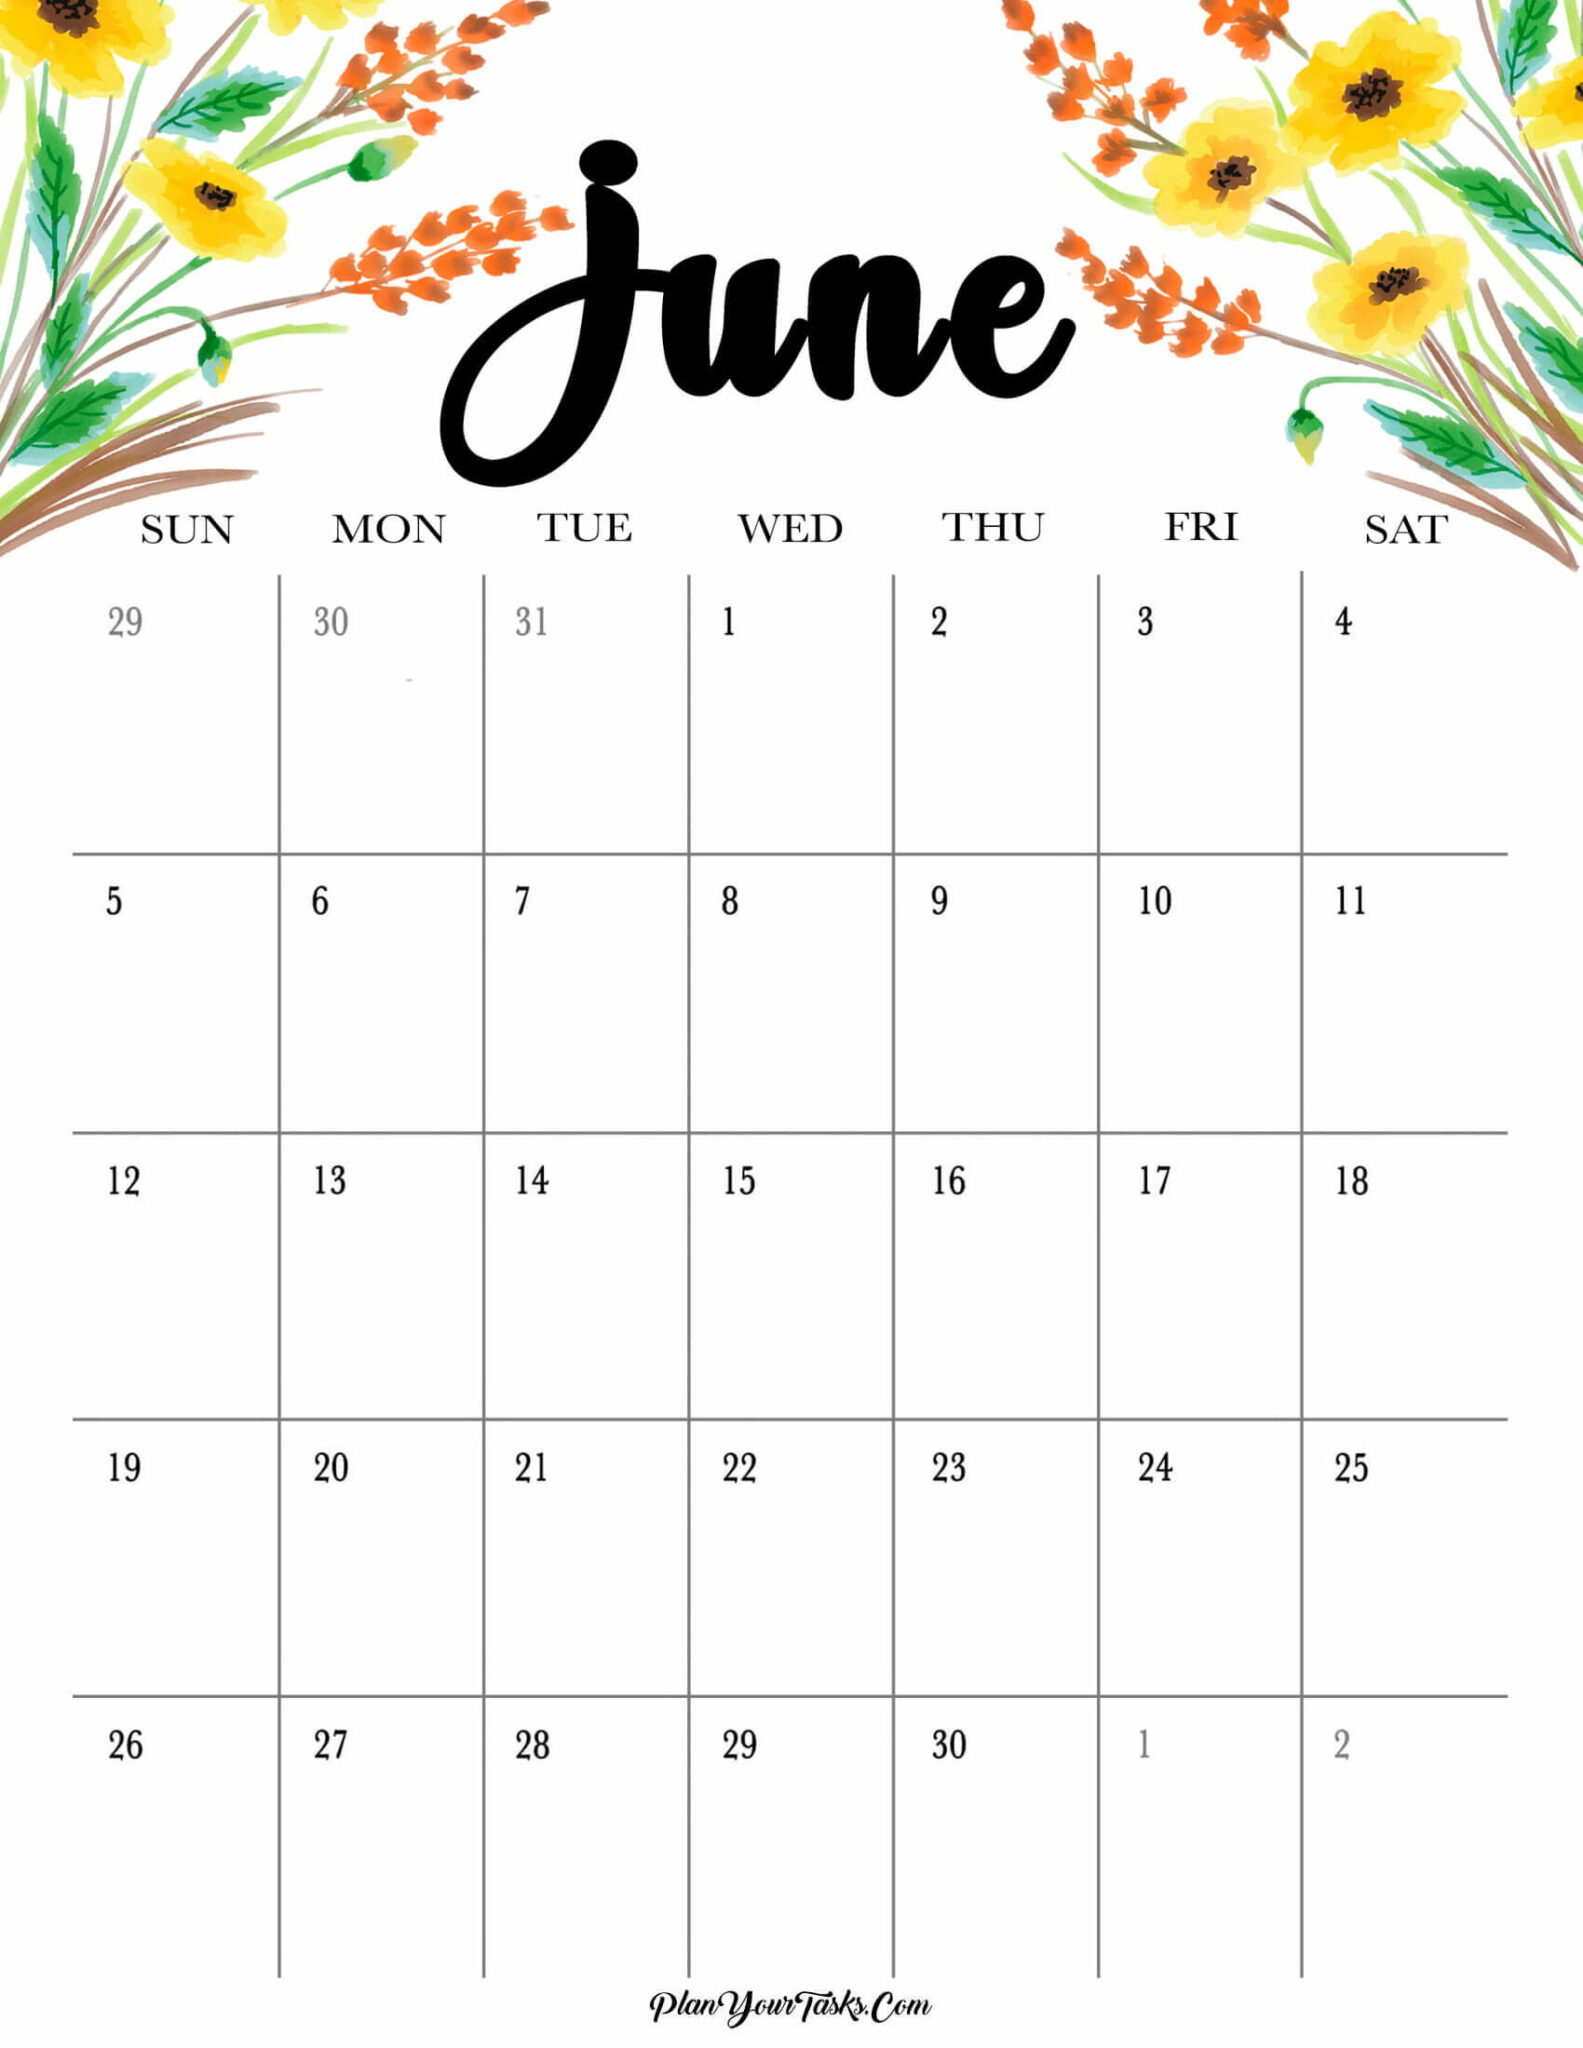 Catch Calendar For 2022 June